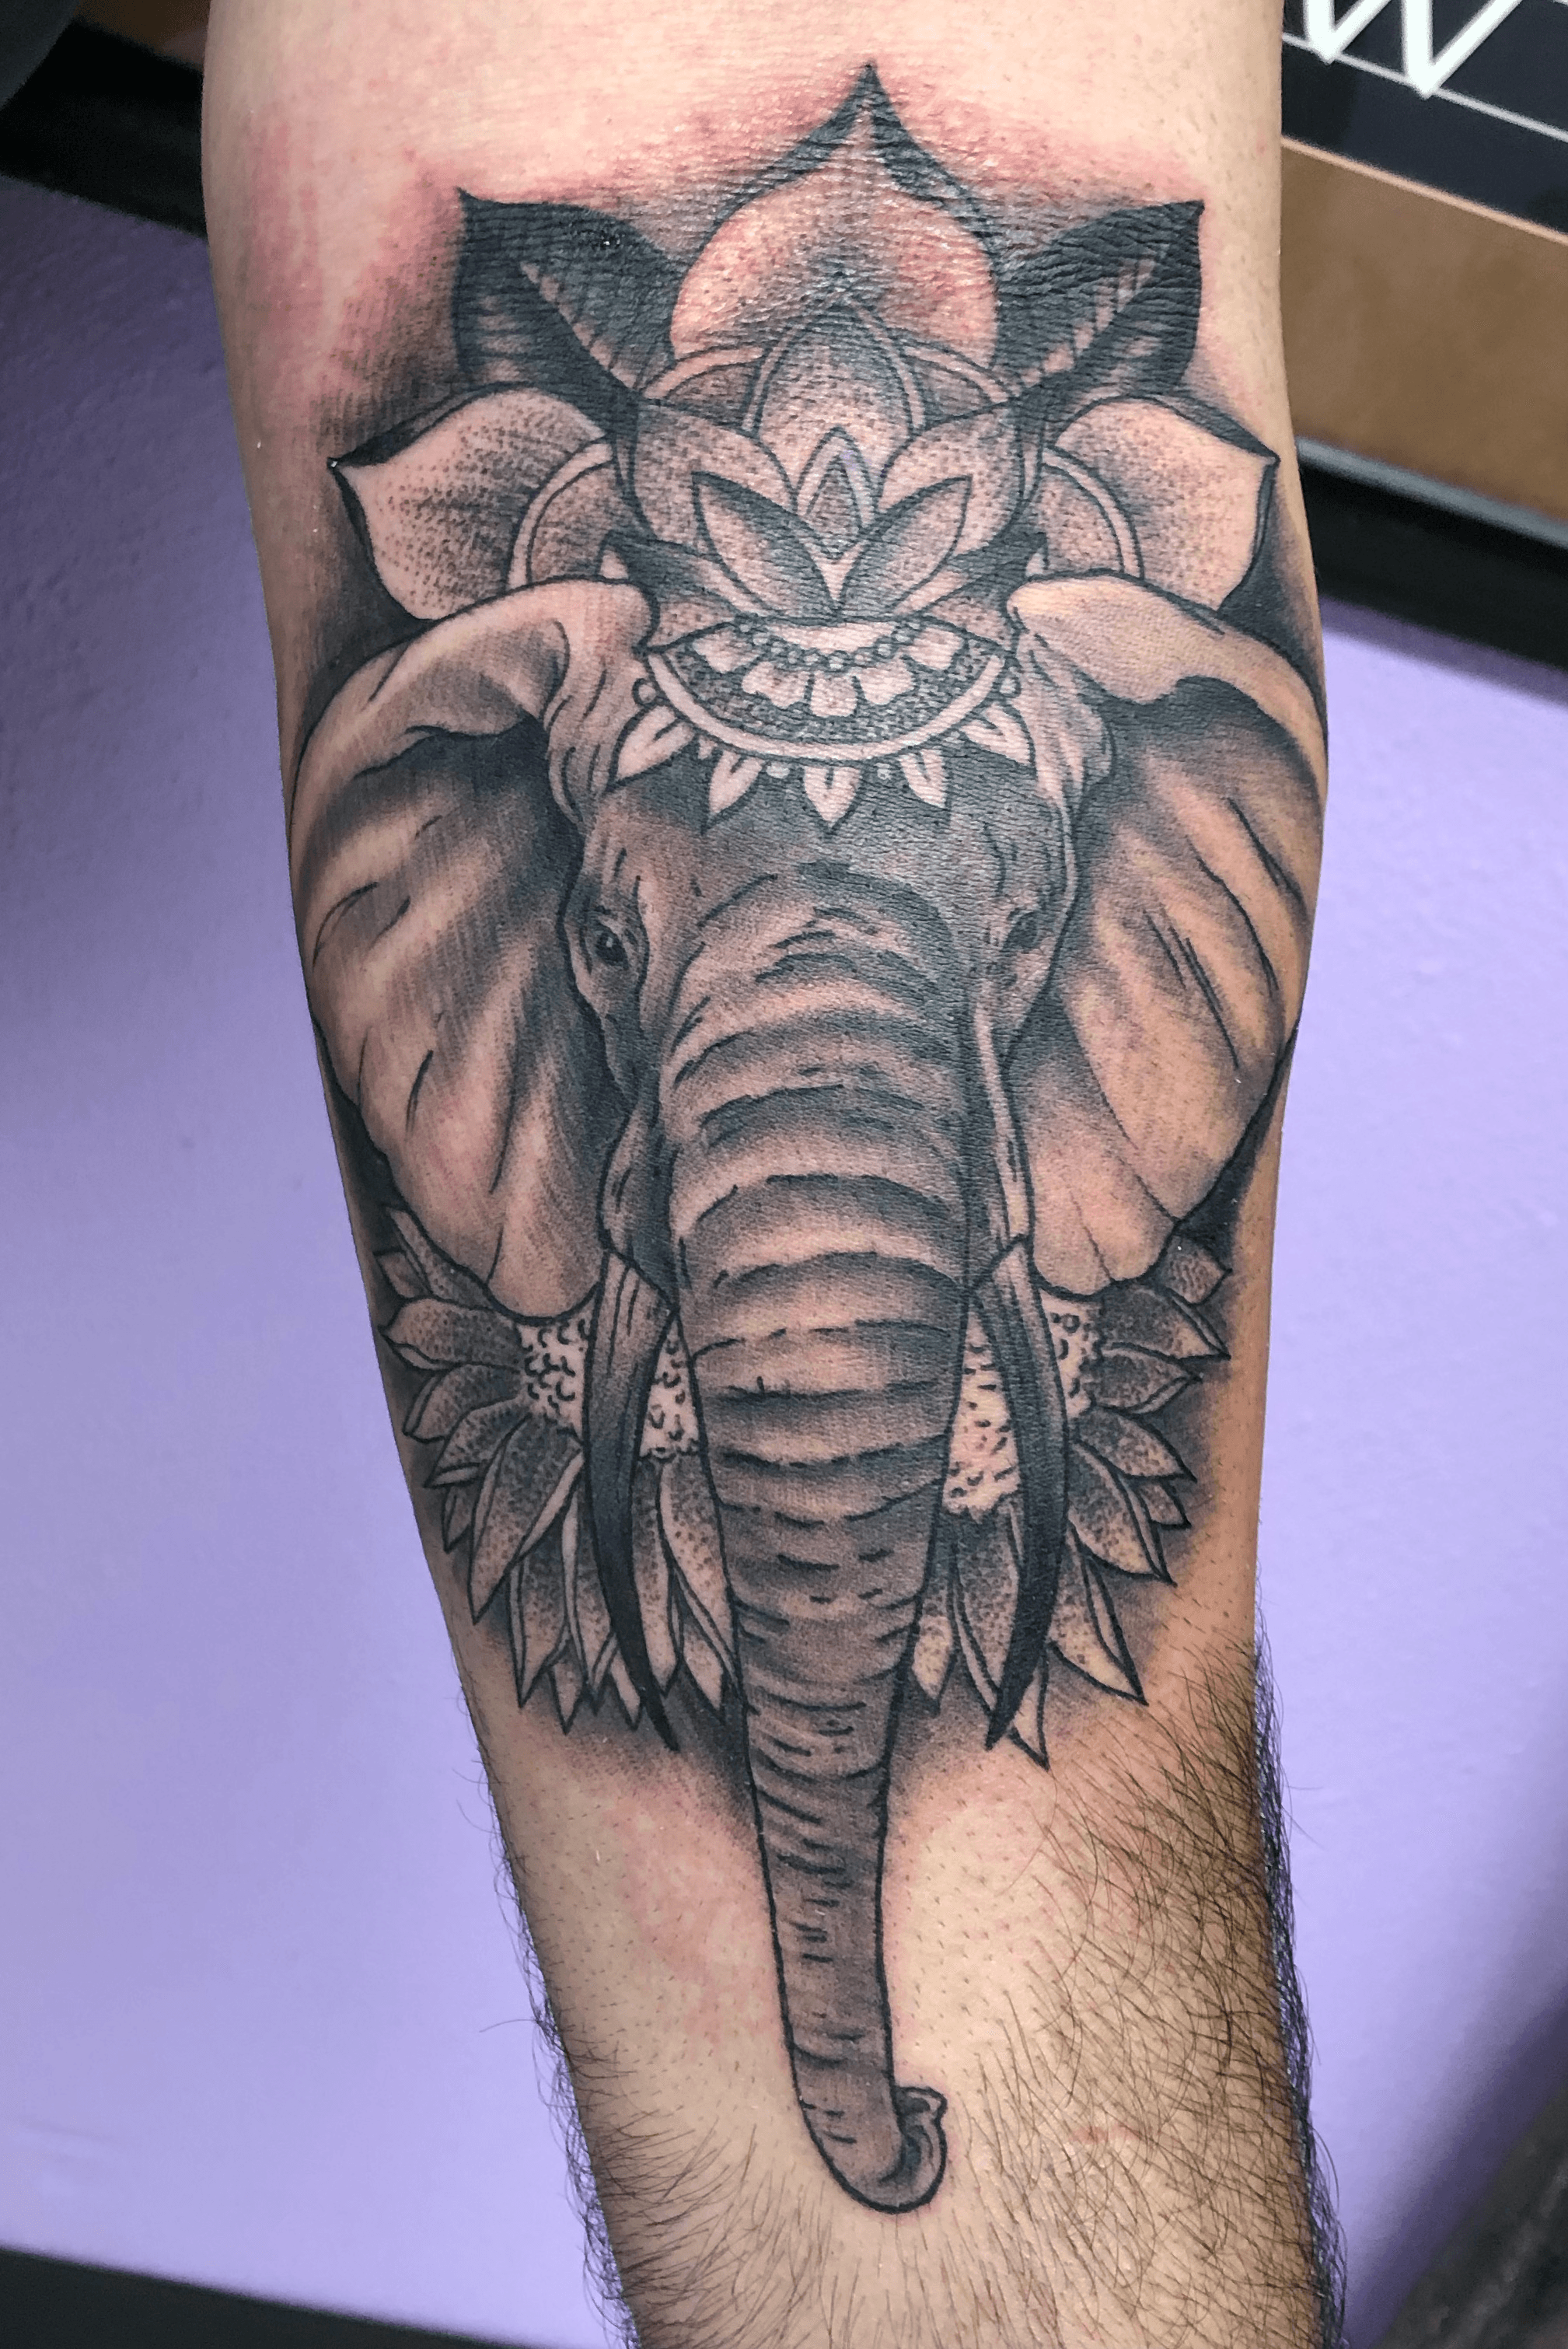 Panumart Tattoo Chiang Mai - Booking Only - Come to Thailand get some elephant  tattoo 🐘 Artist: Ahm 👩🏽 custom design 🌐 Website: www.Thai.tattoo 💙  Facebook: Panumart Tattoo 🌼 Instagram: Panumart _tattoo